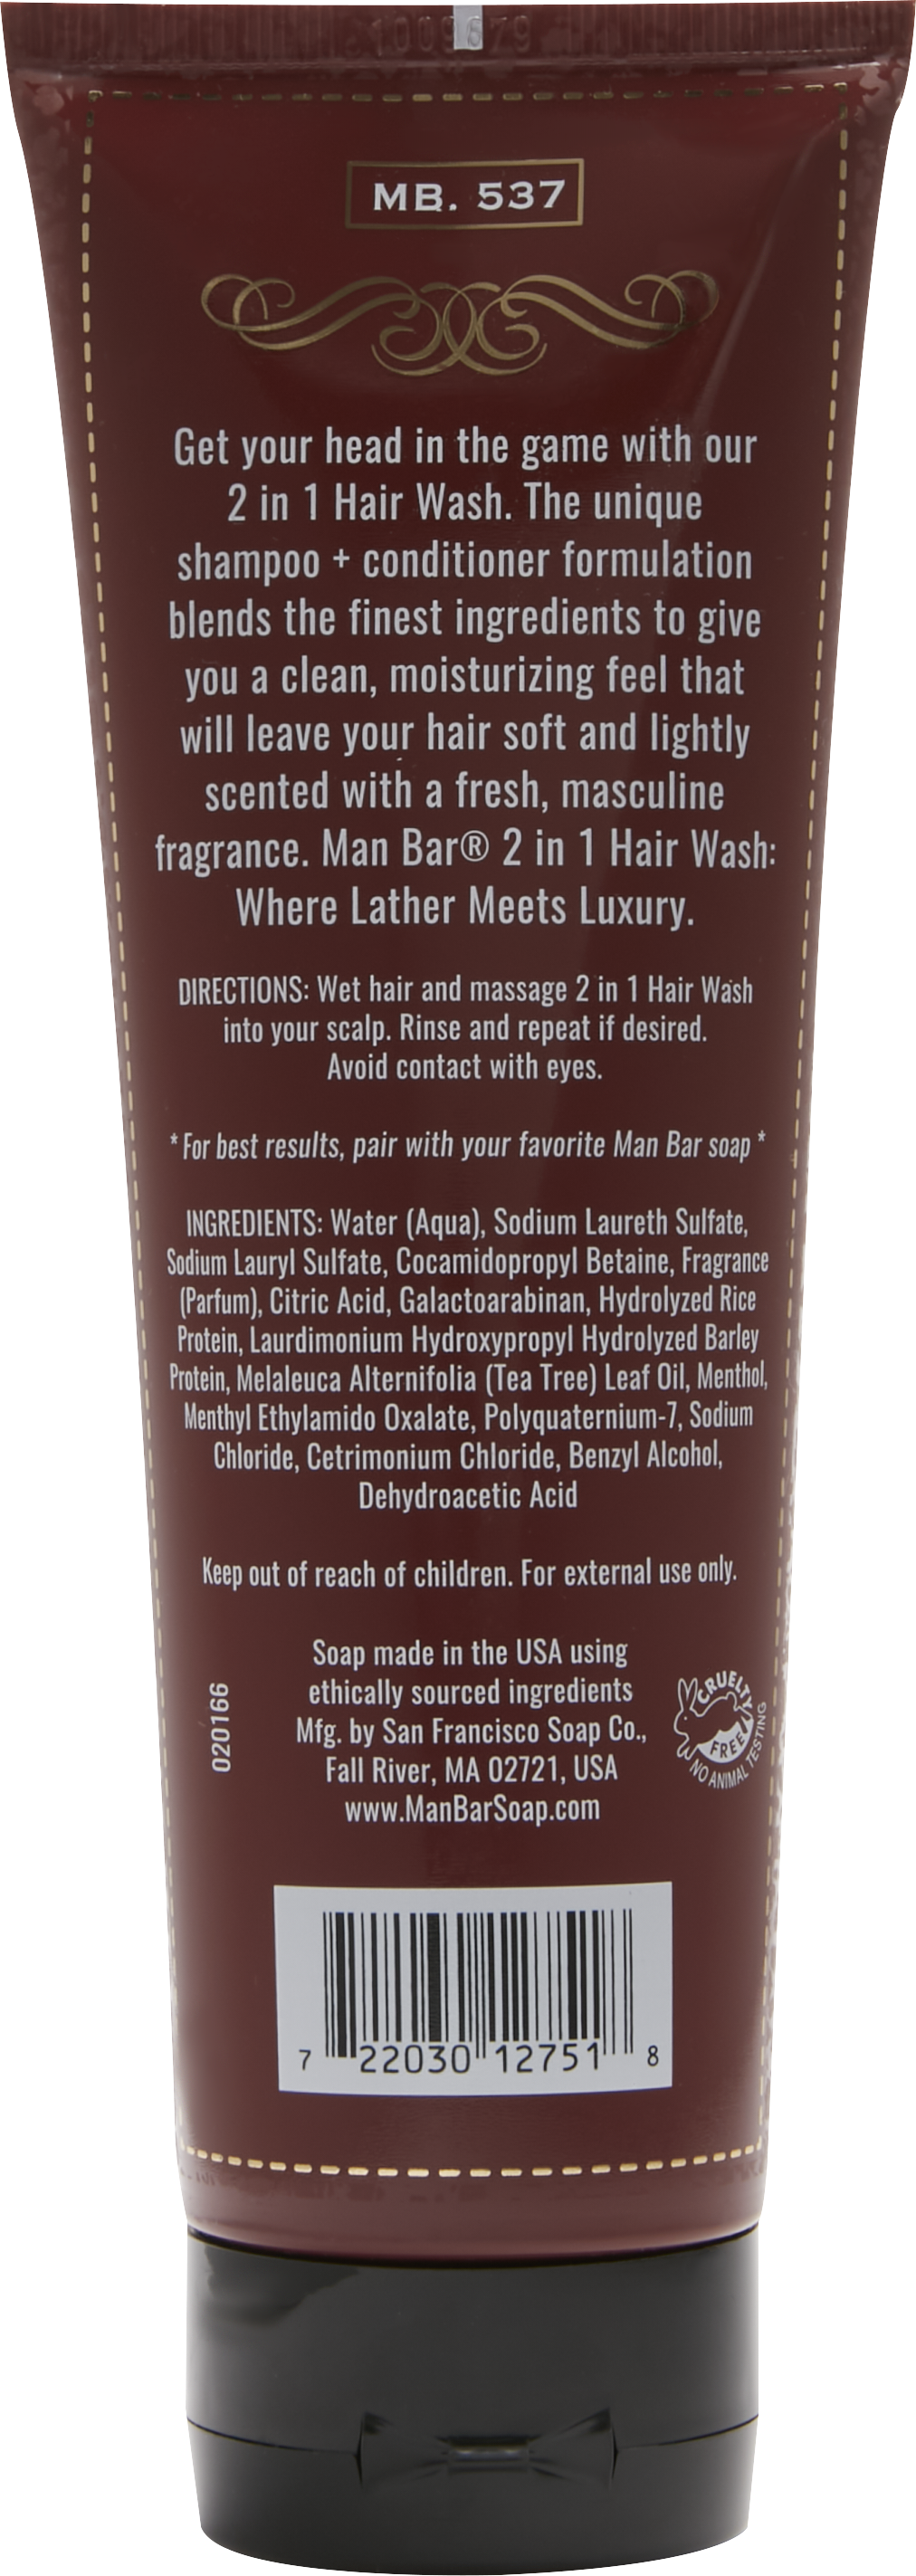 Man Bar Exotic Musk & Sandalwood 2-in-1 Hair Wash, 8.5 oz.